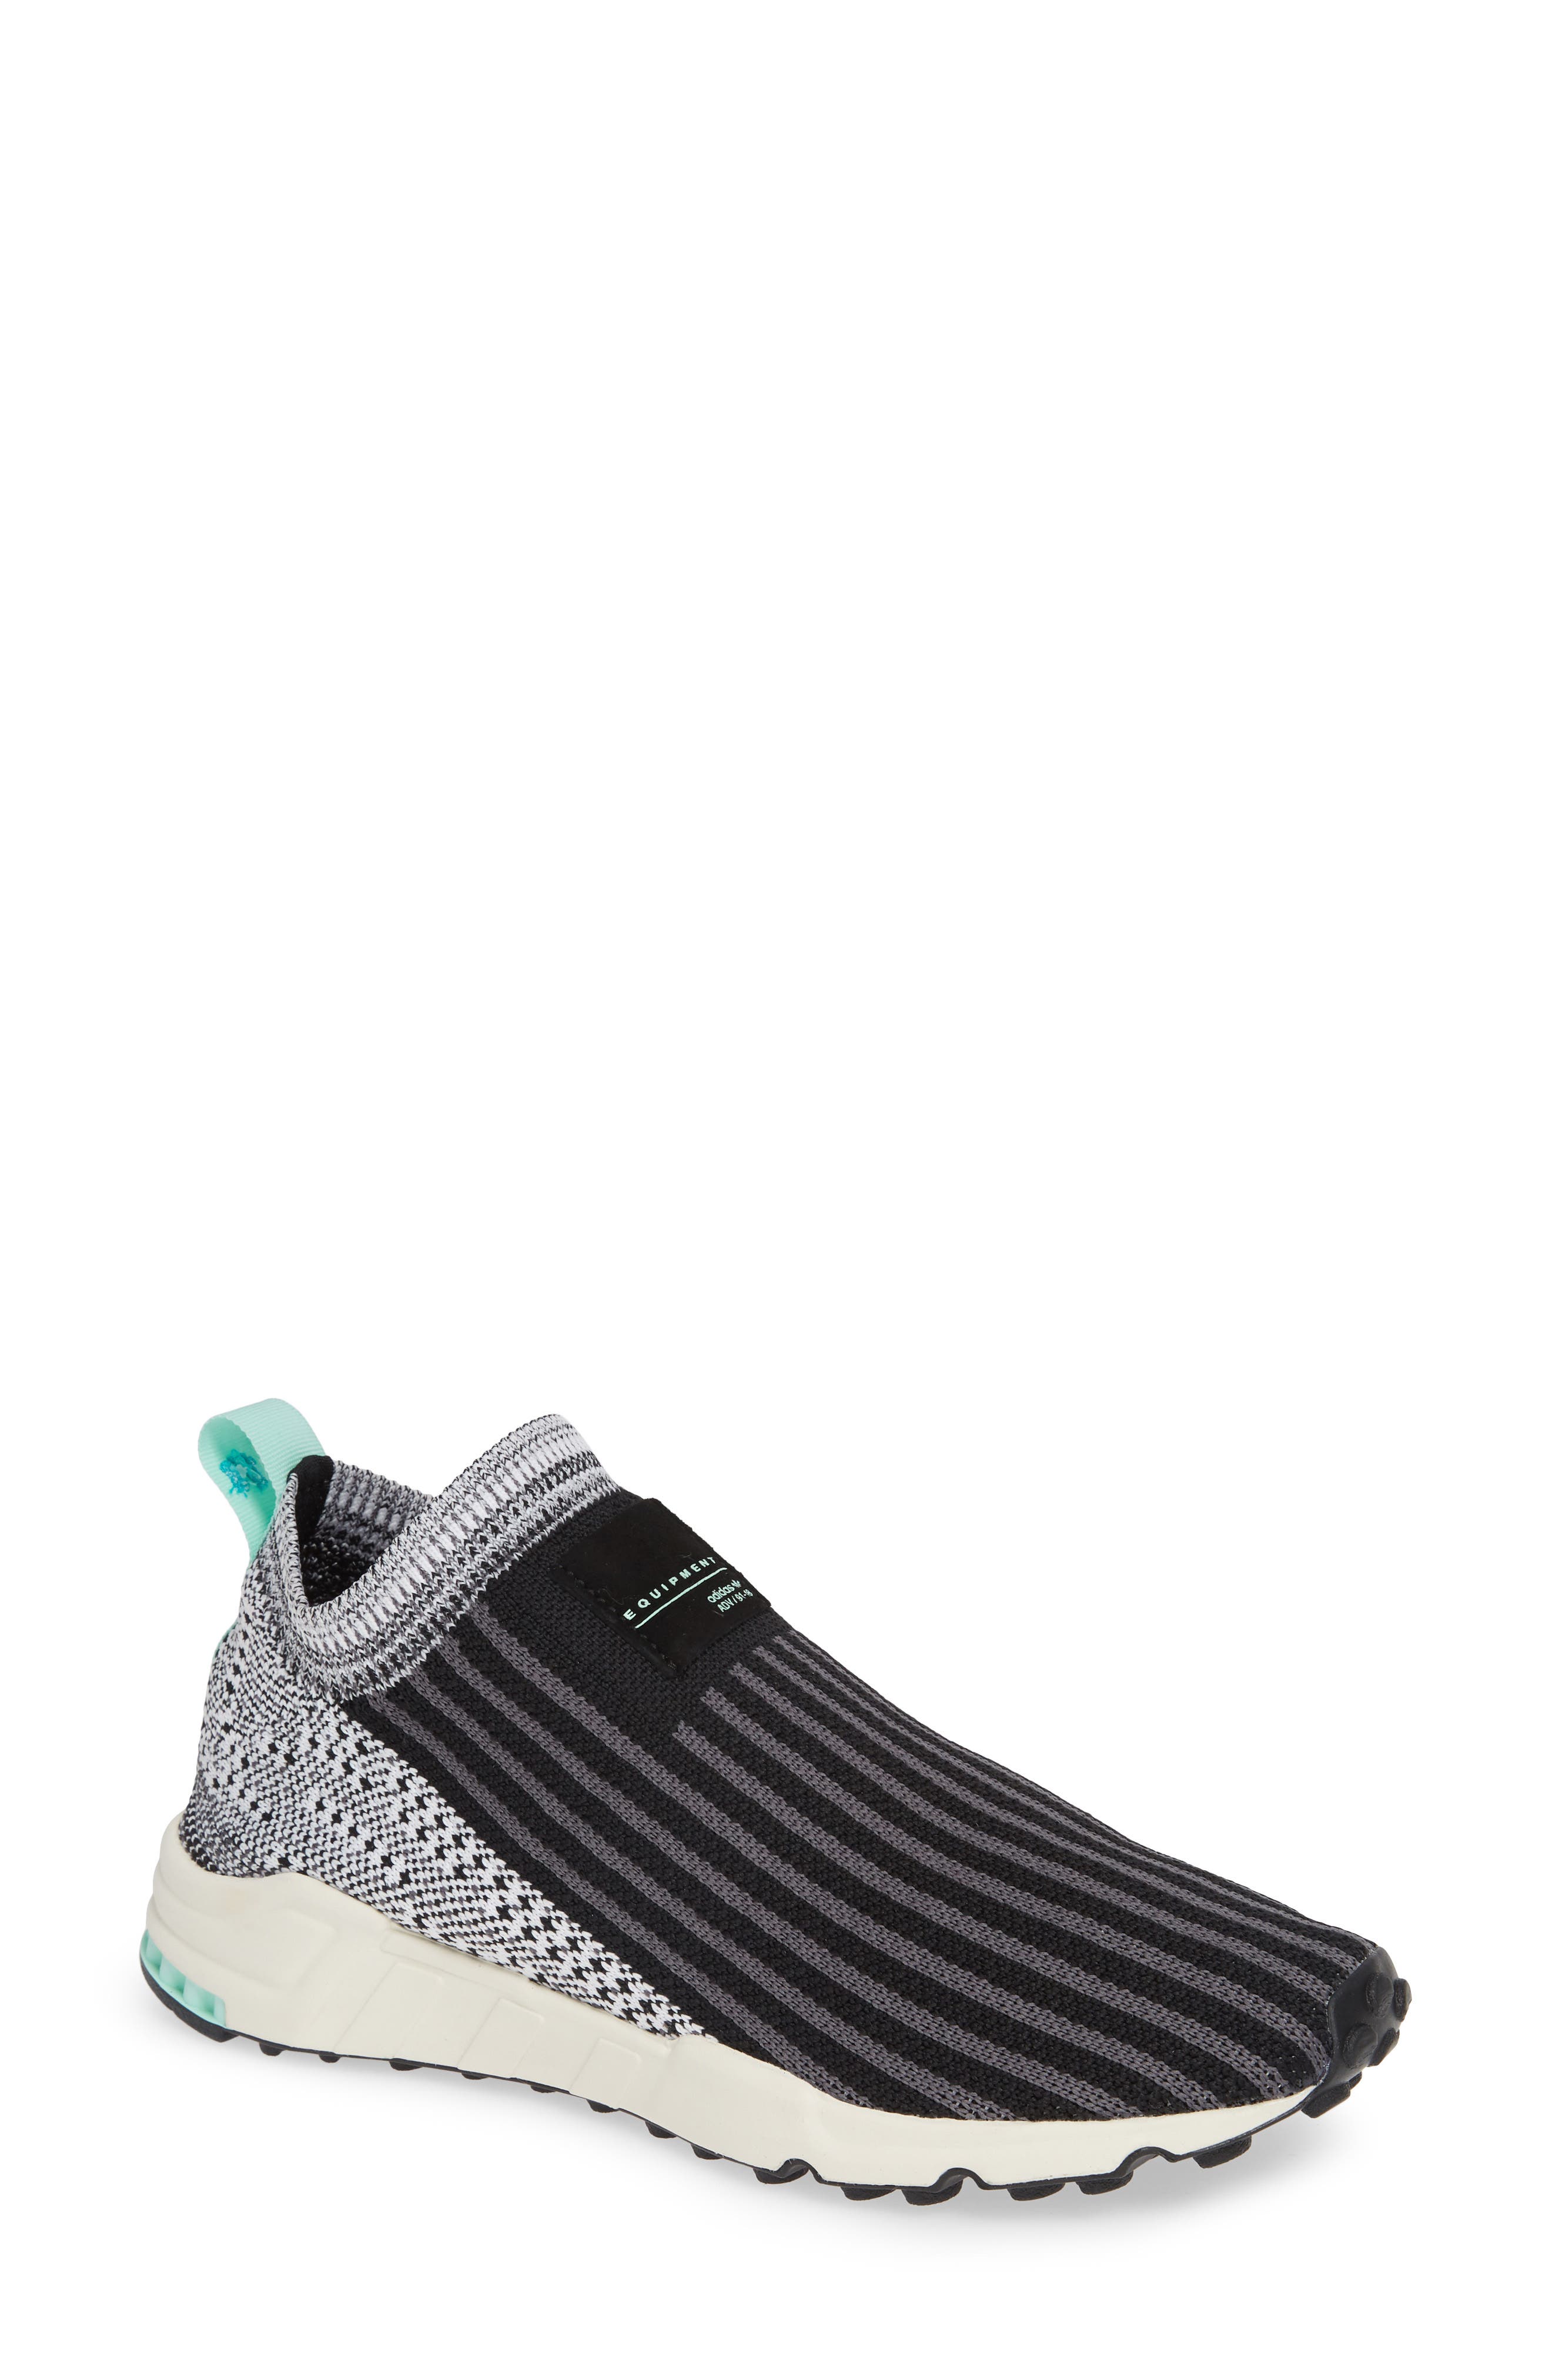 adidas eqt support sock primeknit sneaker